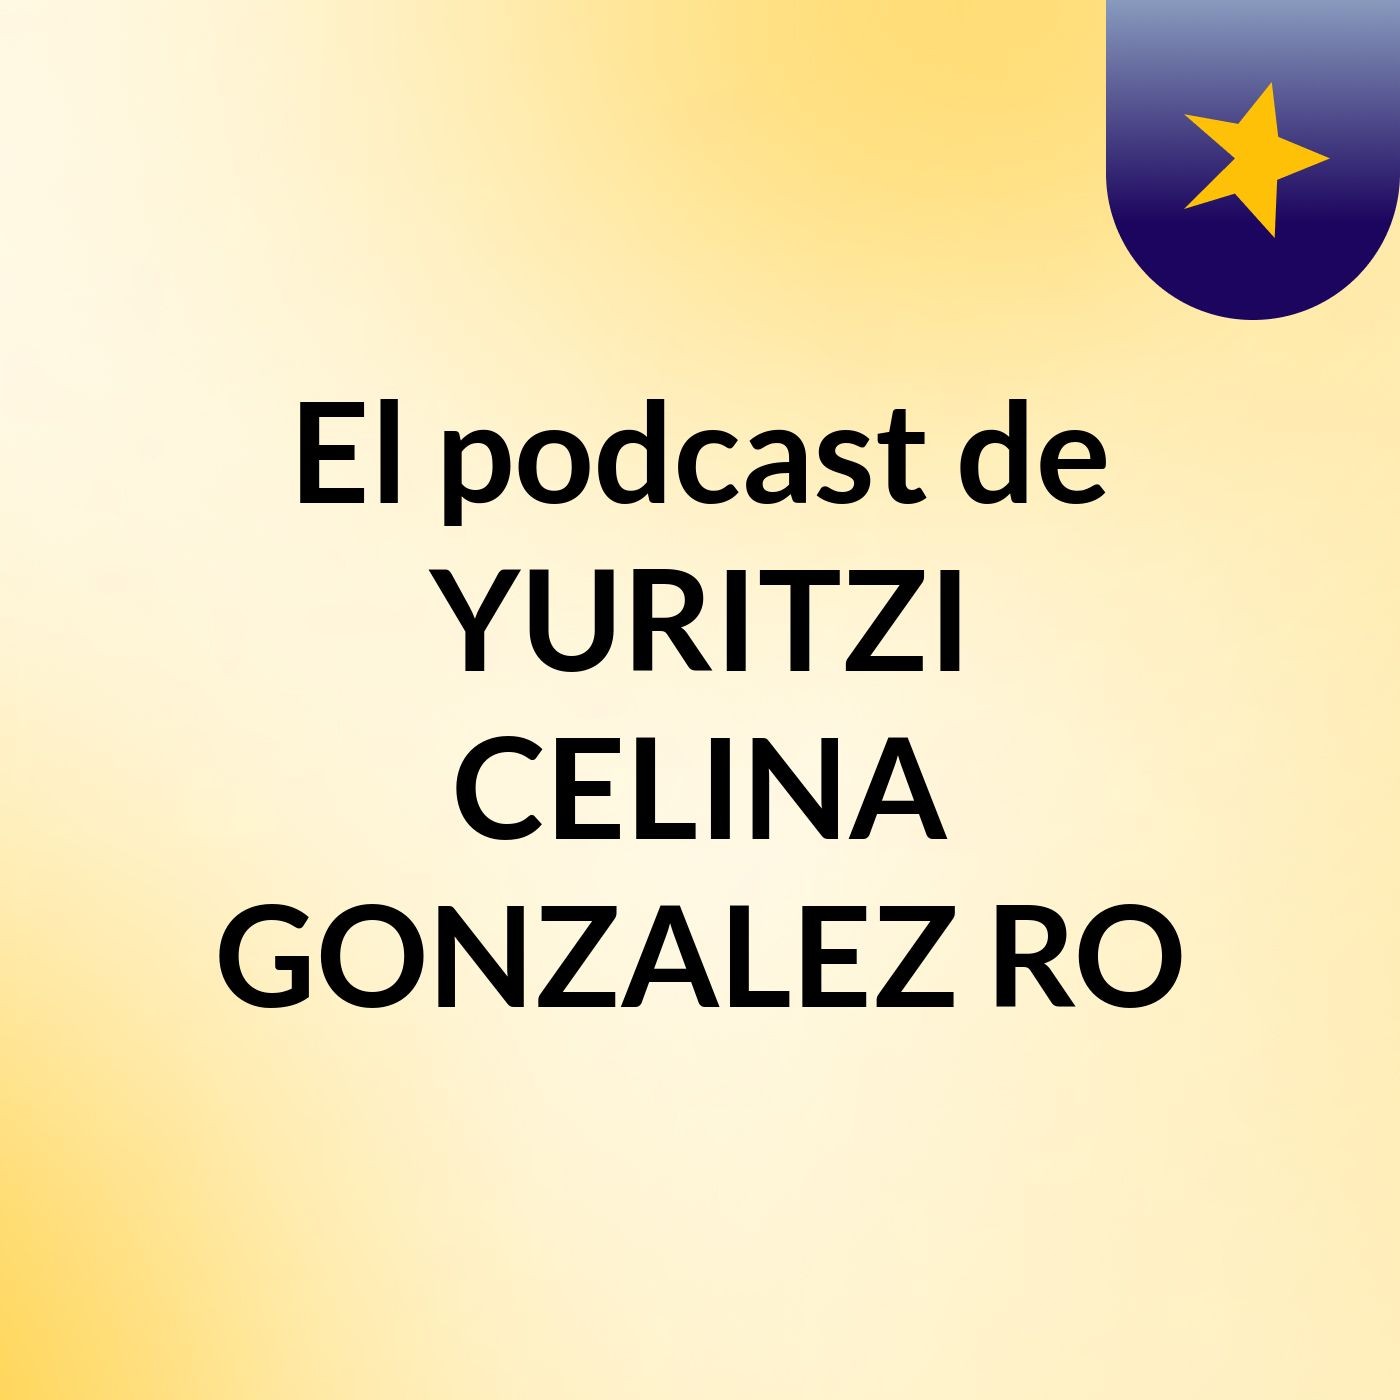 El podcast de YURITZI CELINA GONZALEZ RO